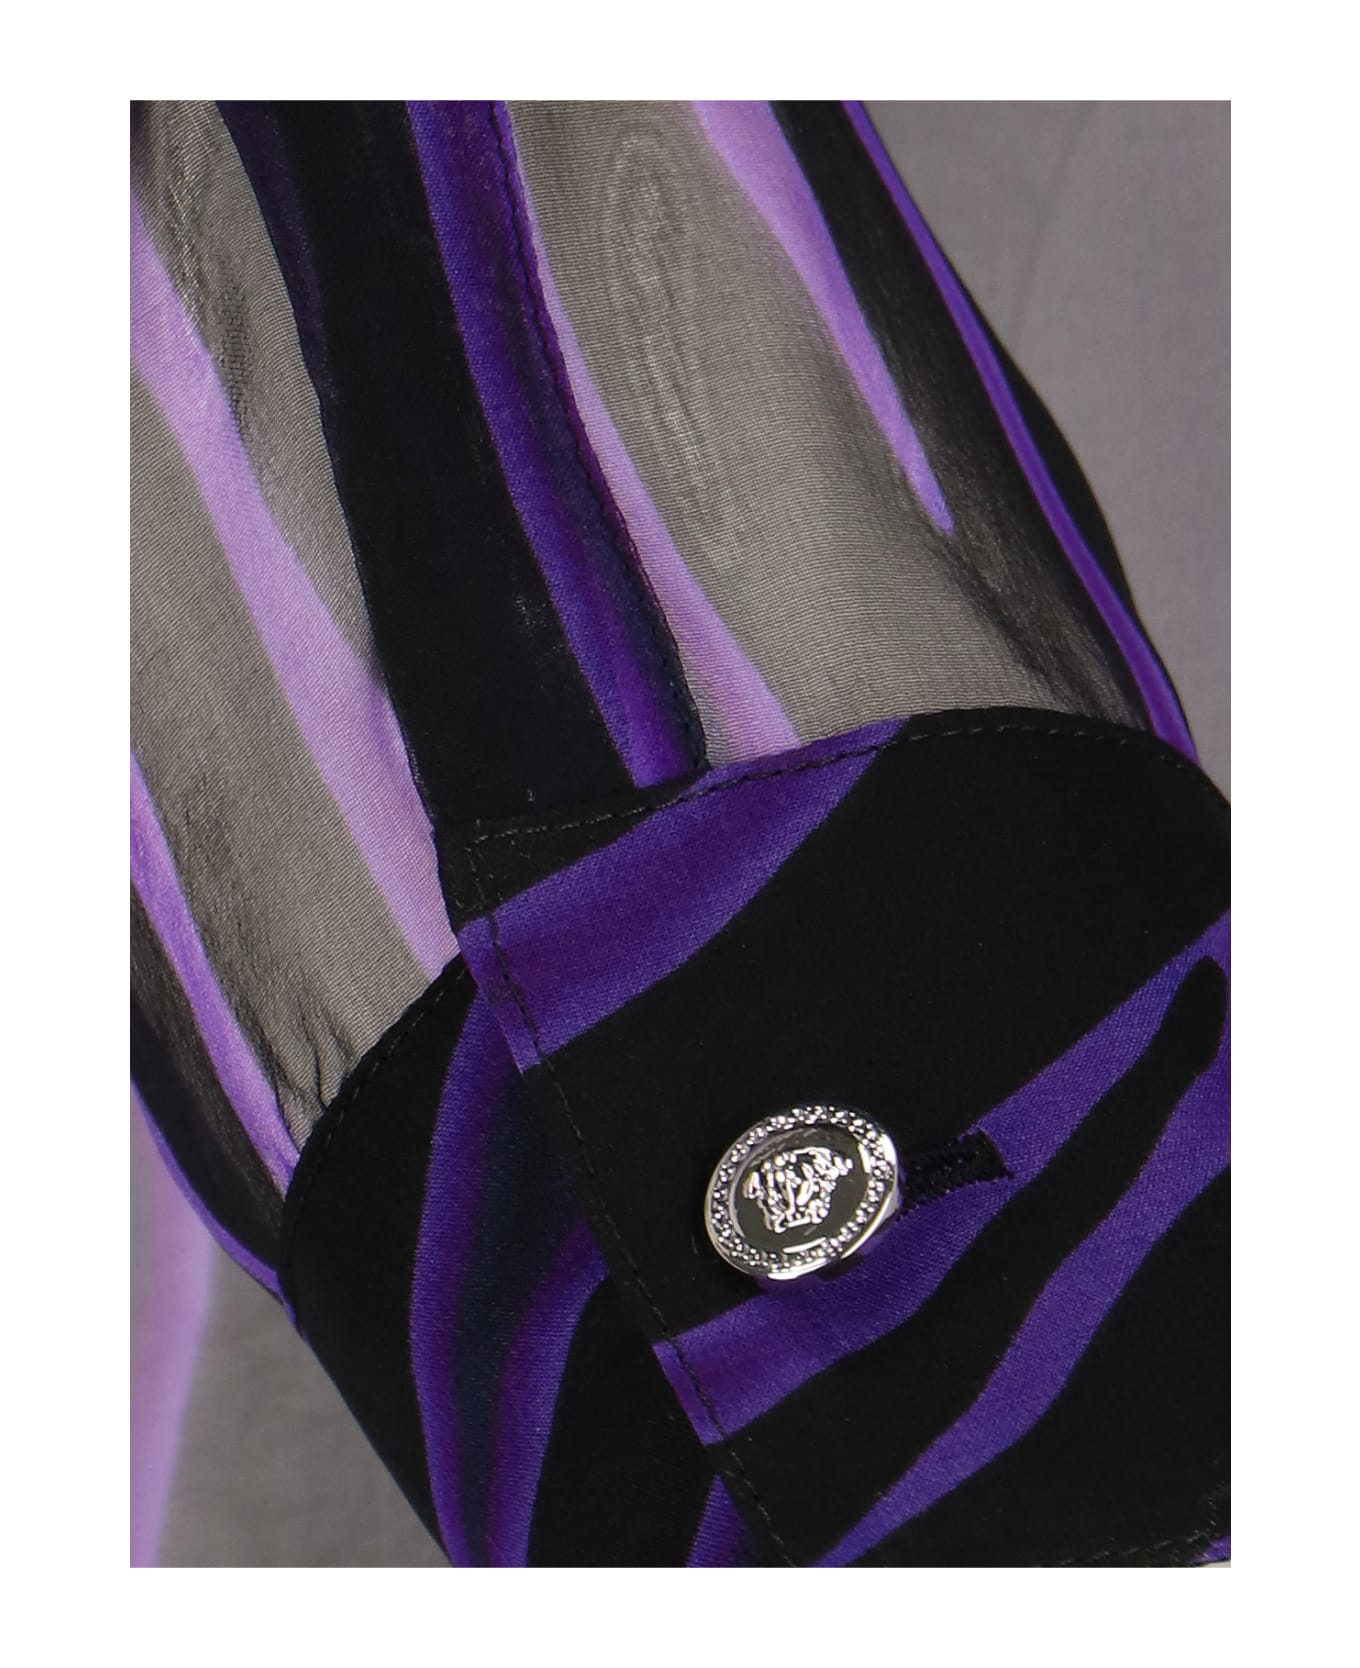 Versace Zebra Sheer Silk Shirt - Violet シャツ